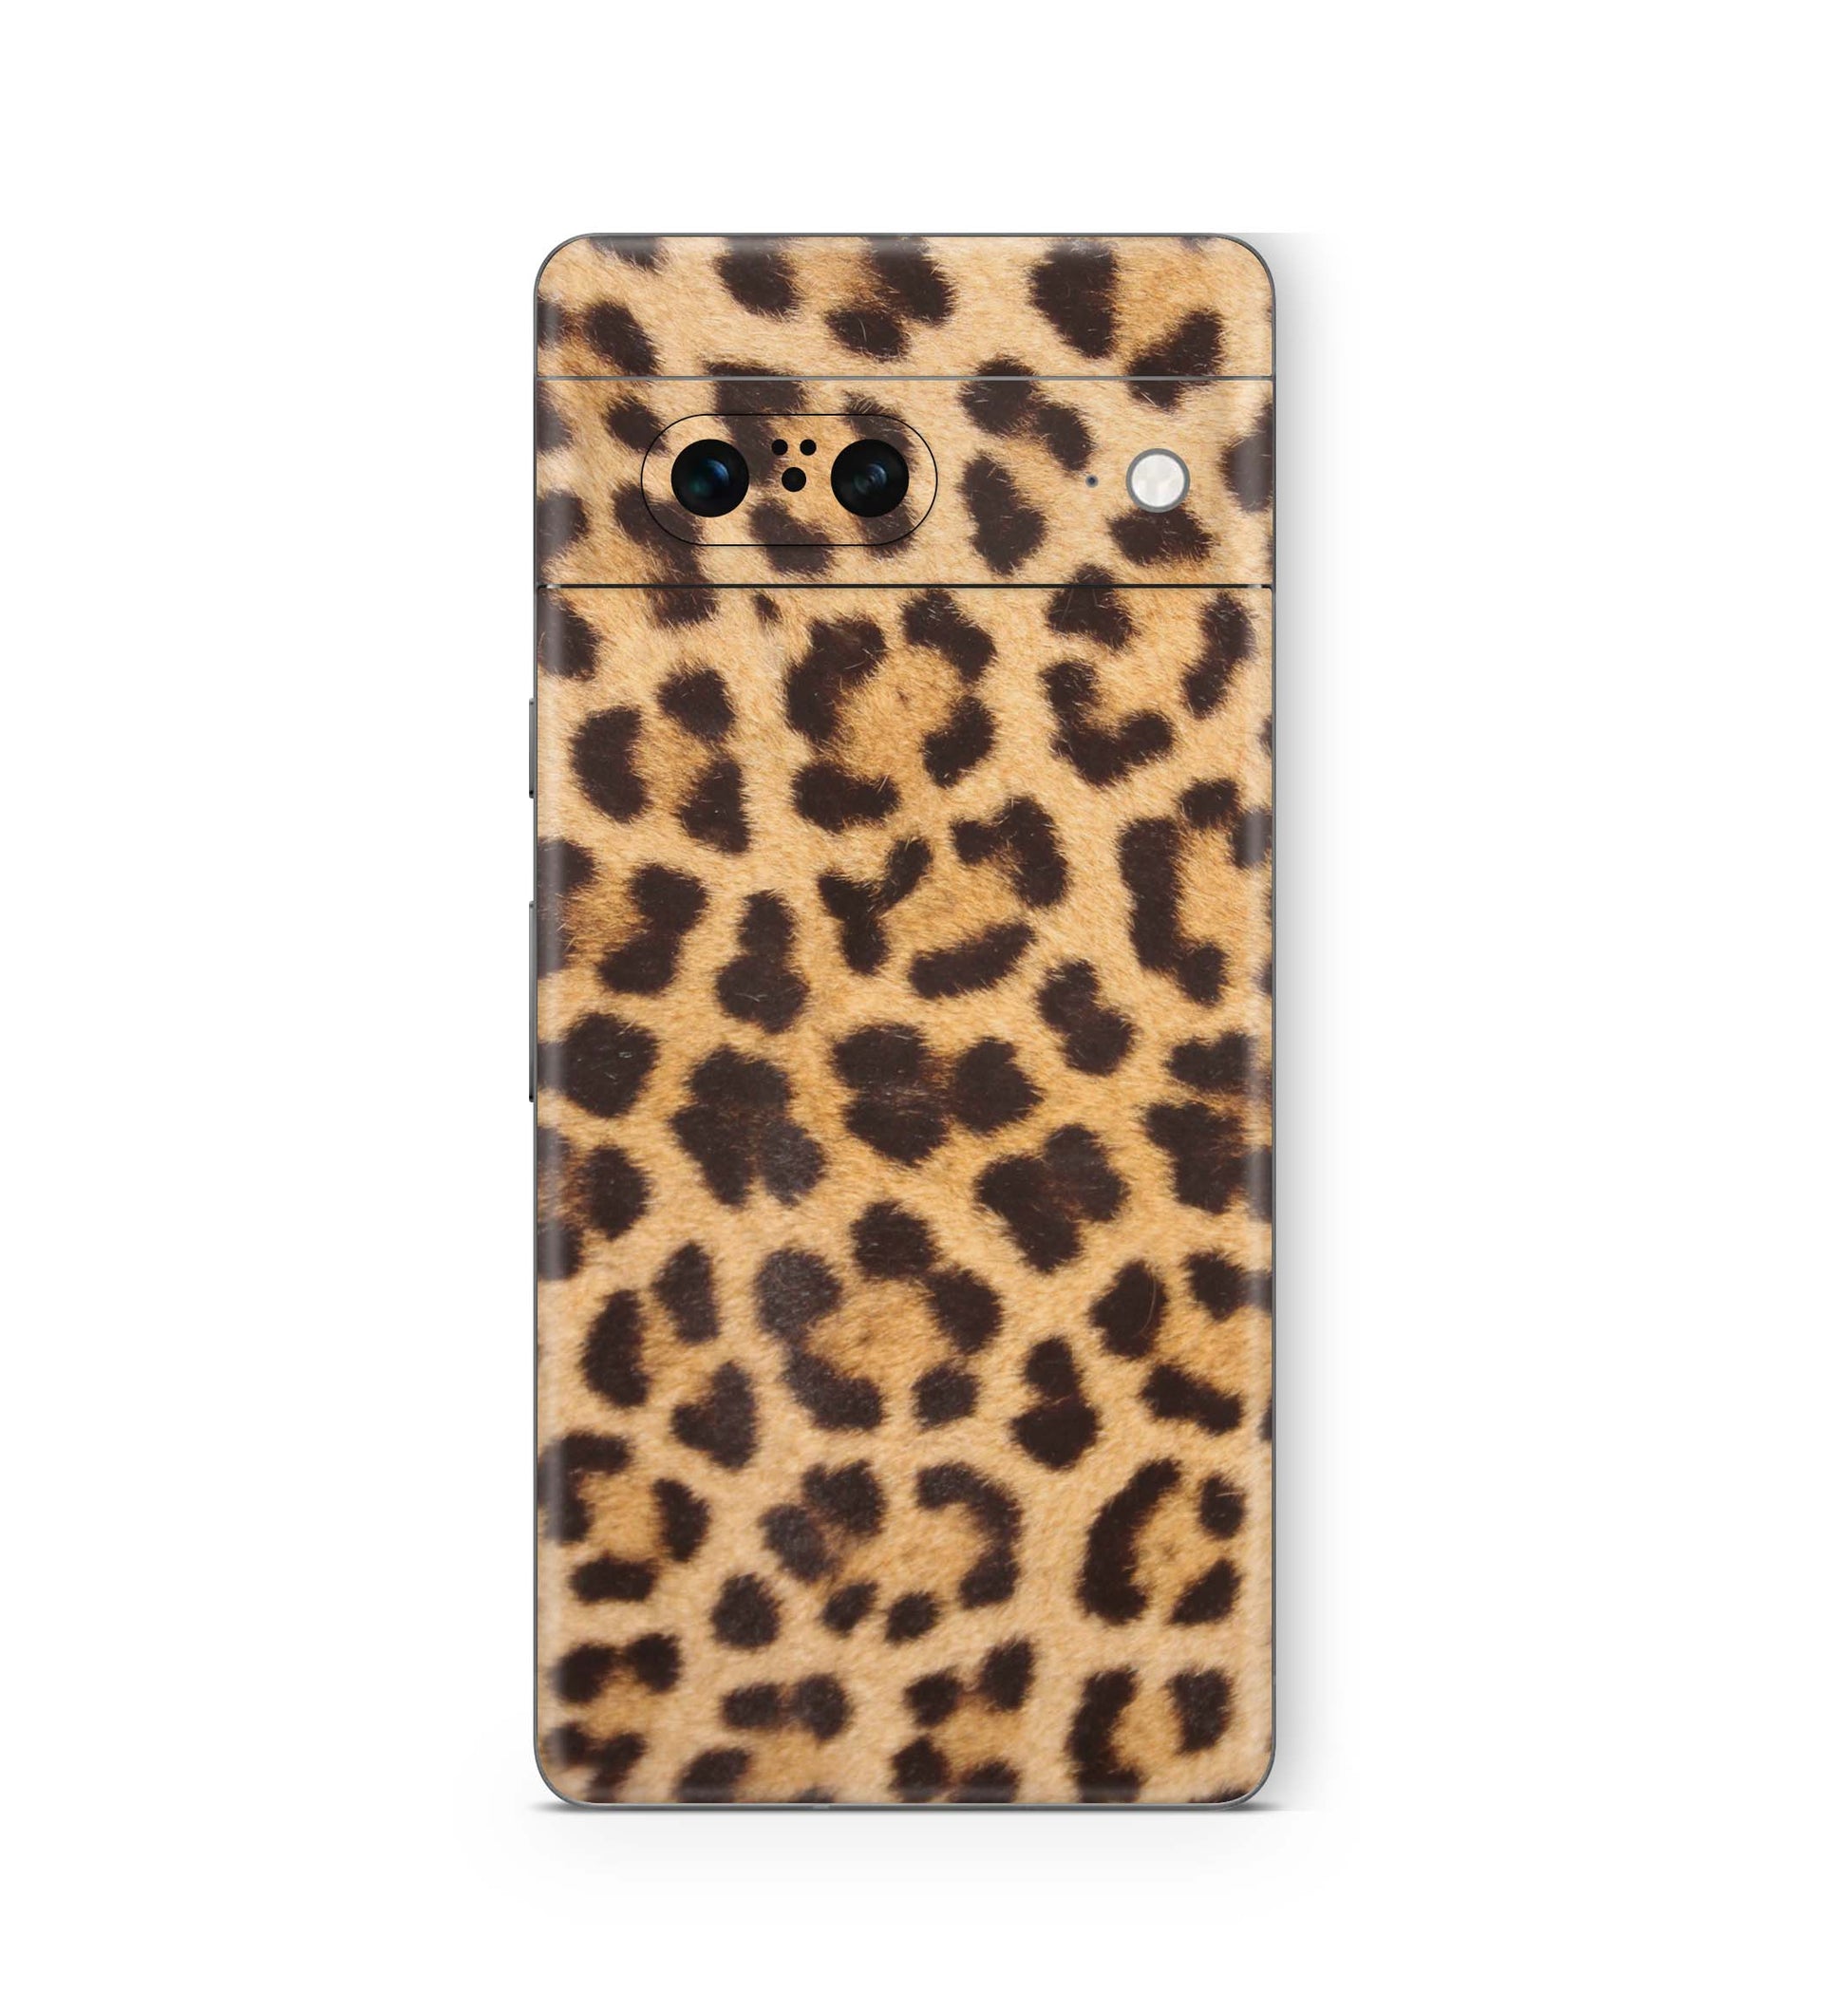 Google Pixel 6a Skin Design Vinyl Premium Aufkleber Schutzfolie leopardenfell Aufkleber Skins4u   